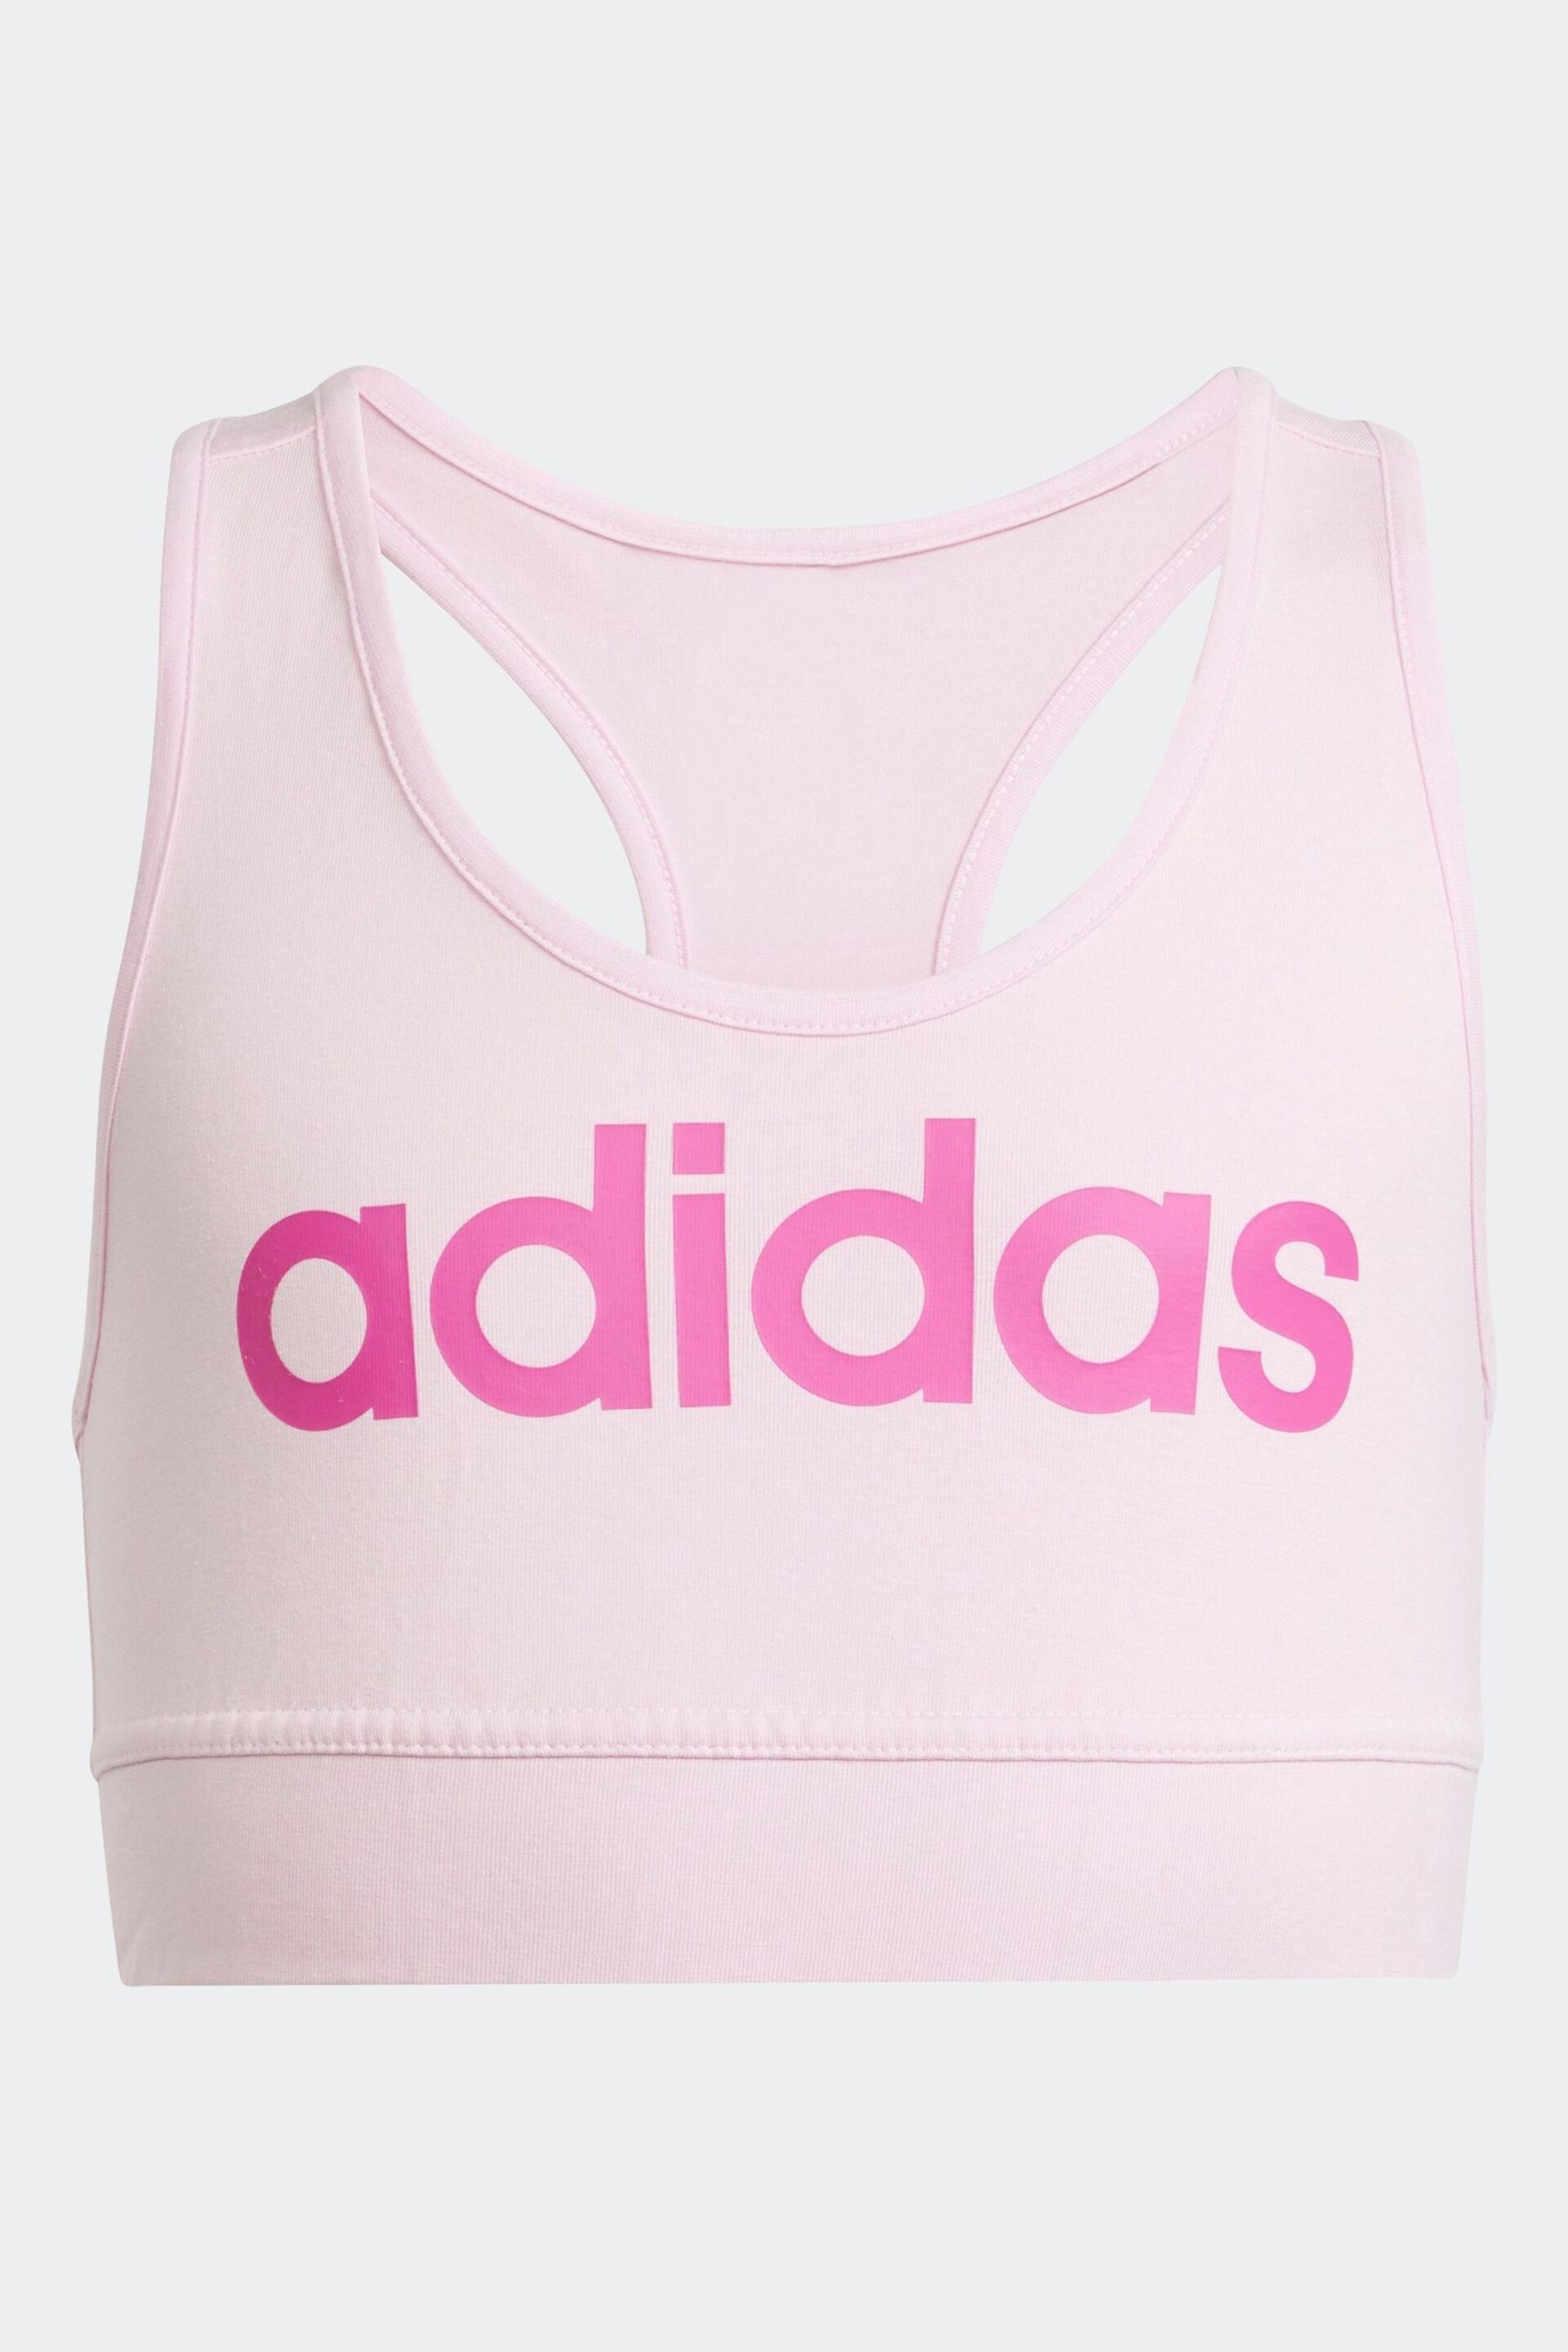 adidas Pink Essentials Linear Logo Cotton Bra Top - Image 1 of 5